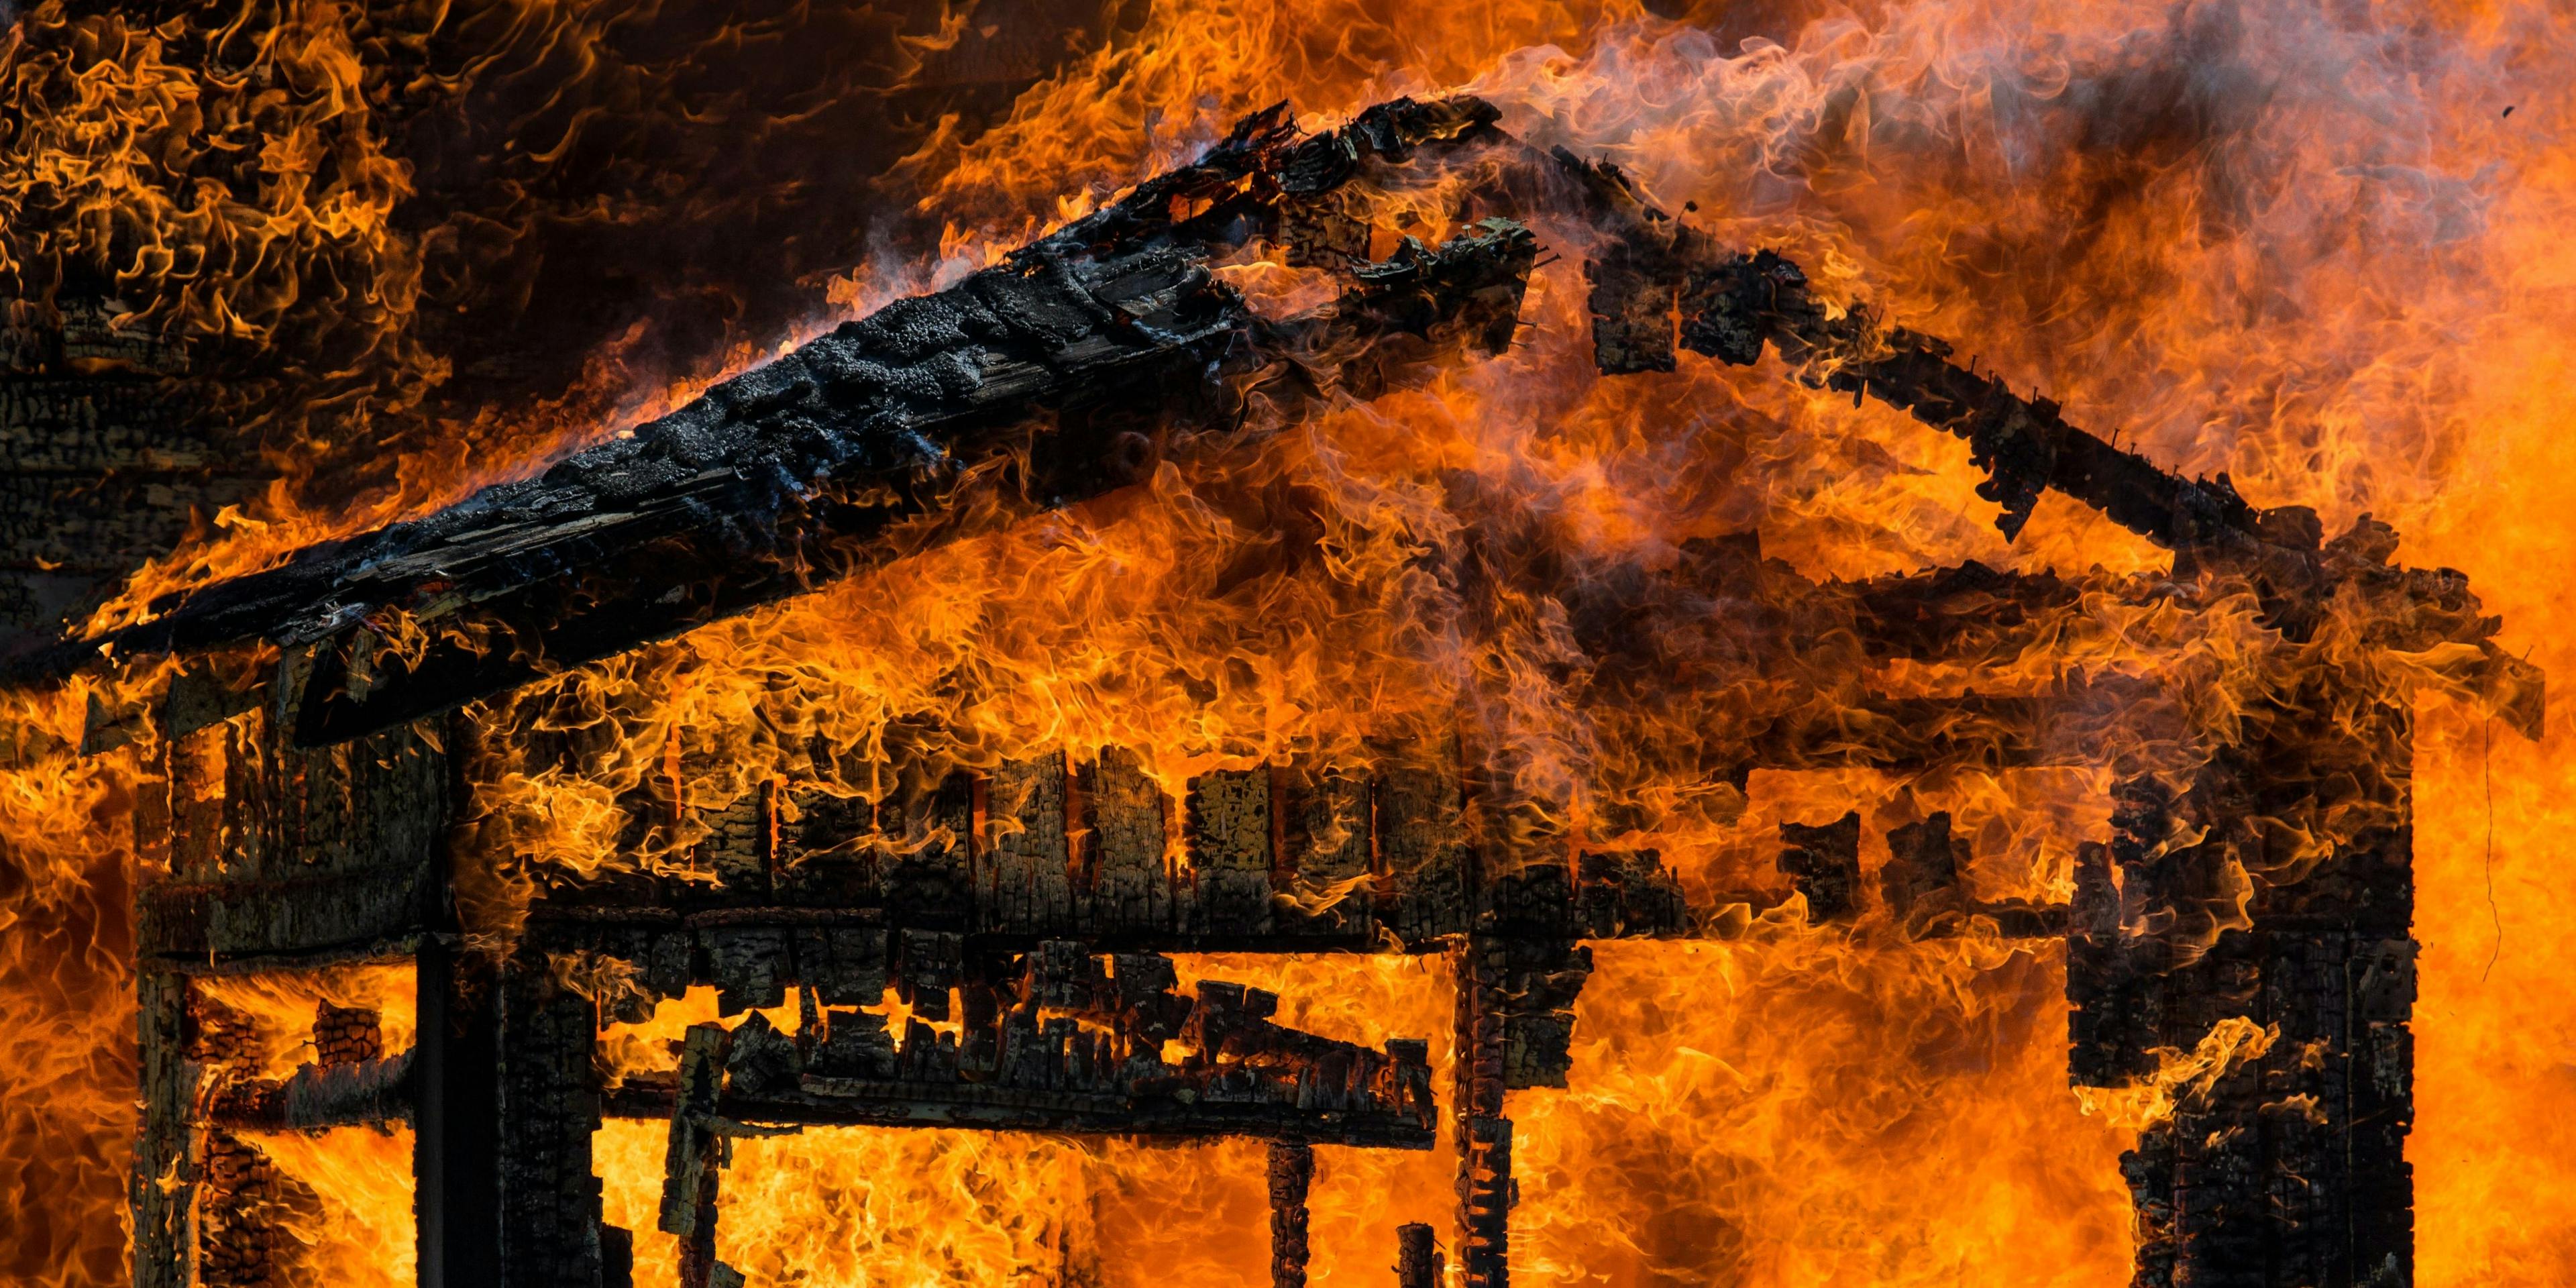 burning building @davehoefler on Unsplash